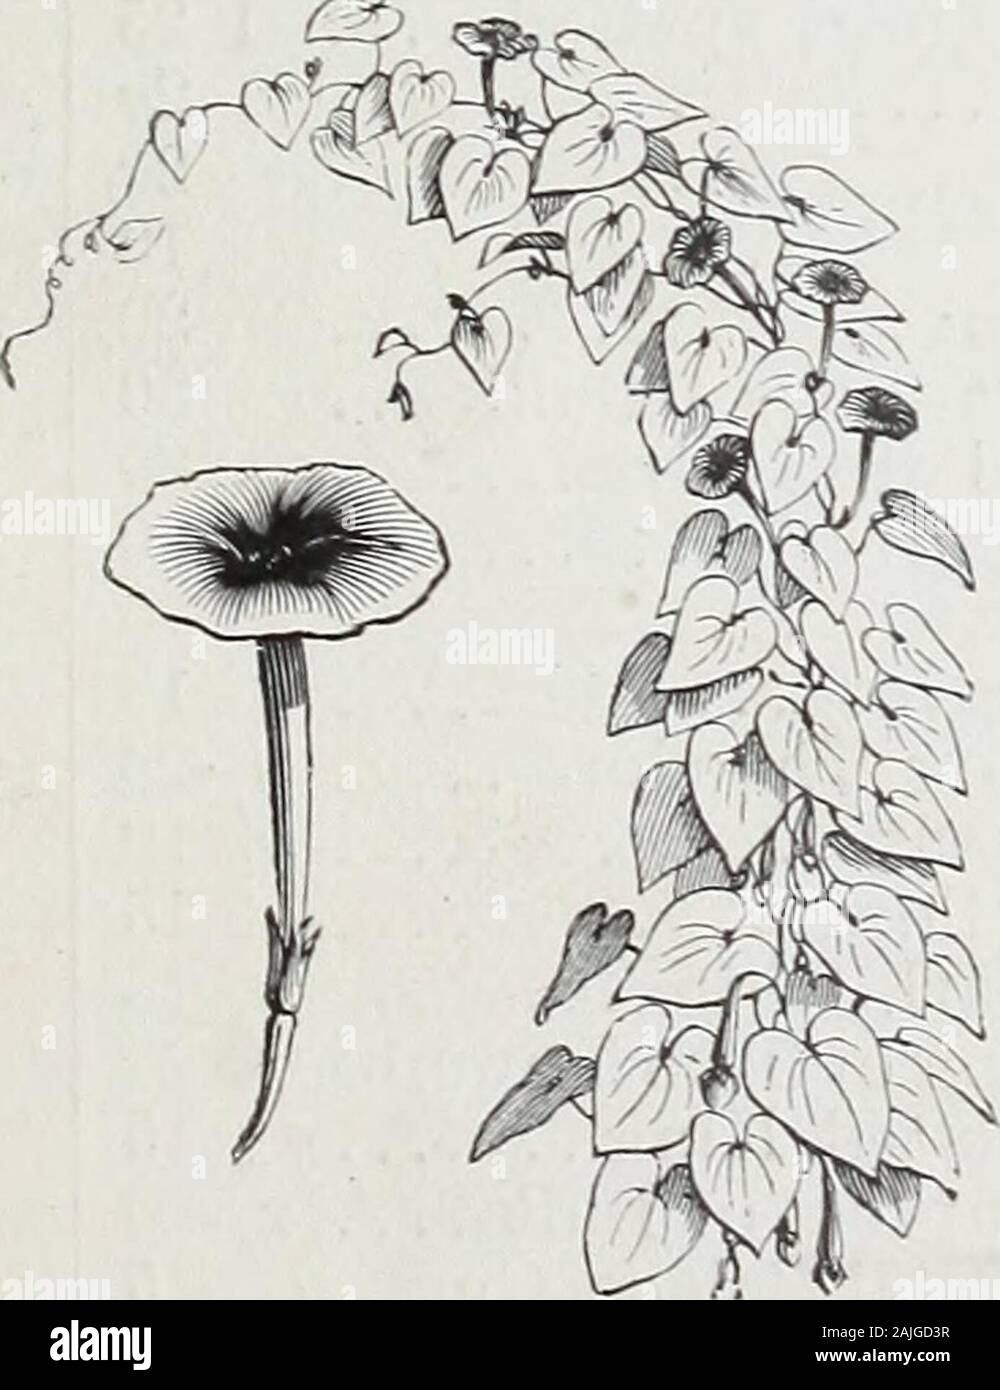 D M Ferry & Co.'s wholesale list of seeds for 1891 . White, finest strain Rose, Salmon, ? Crimson, • *, k Choicest mixed Honesty, or Satin Flower, (Lunaria biennis) Hyacinth Bean, Purple, (Dolichos lablab) White, igrals mixed Ipomea coccinea, fine scarlet bona nox (good night) white limbata, purple and white.... C? elegantissima, very large J. (Calonyction) granditlora, (Moon Flower), 4^F%¥*d, white seed (Calonyction) granditlora, (Moon Flower), black seed.. . Jobs Tears, (Coix lachryma) . .. x*,.v J.-, ... j Lantana, finest French Hybrids, mixed Larkspur (Delphjnium), double dwarf rocket, Stock Photo